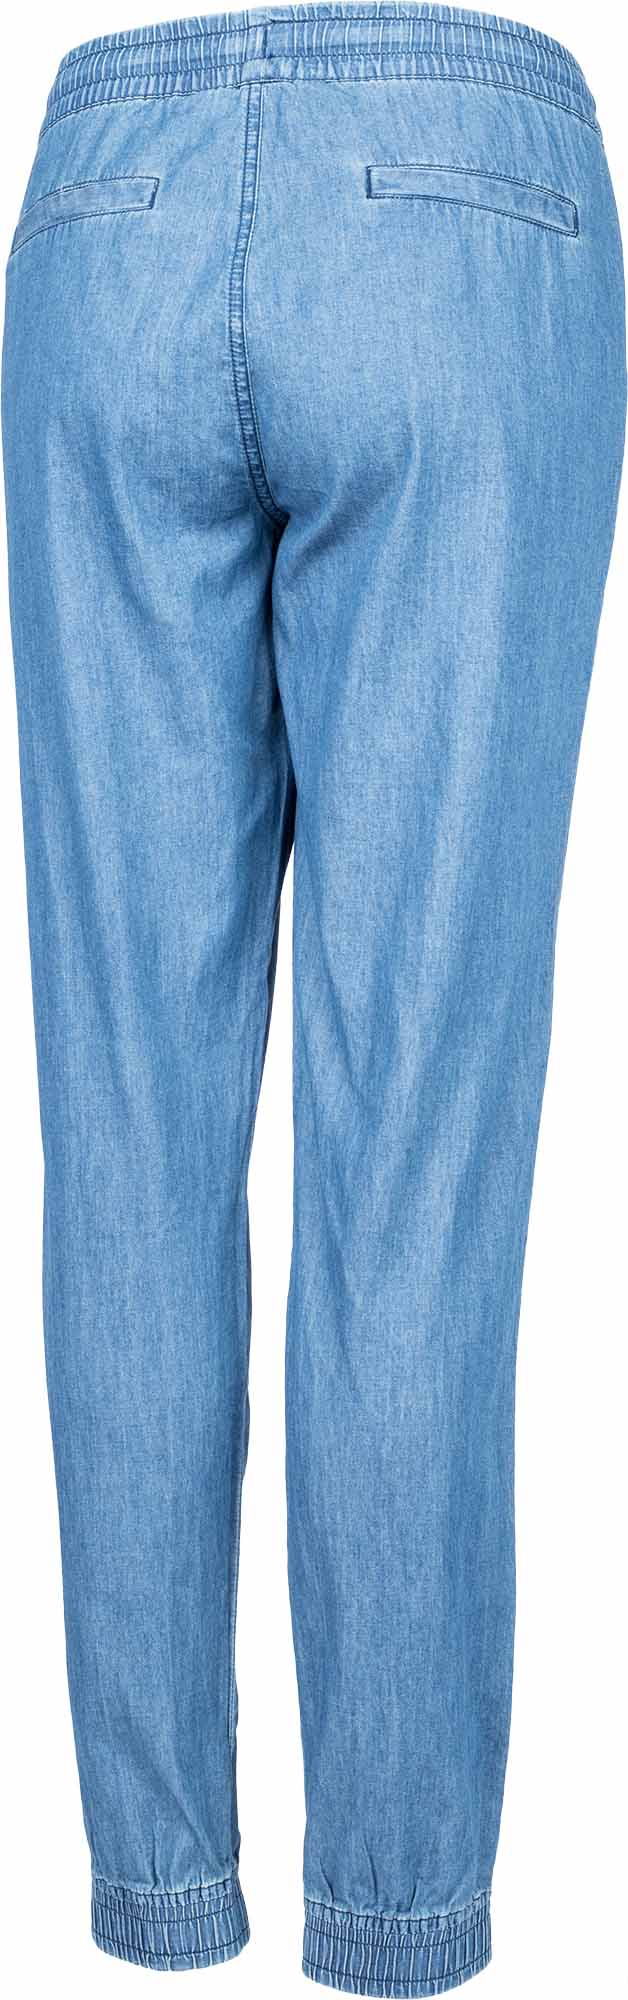 Women's jean pants